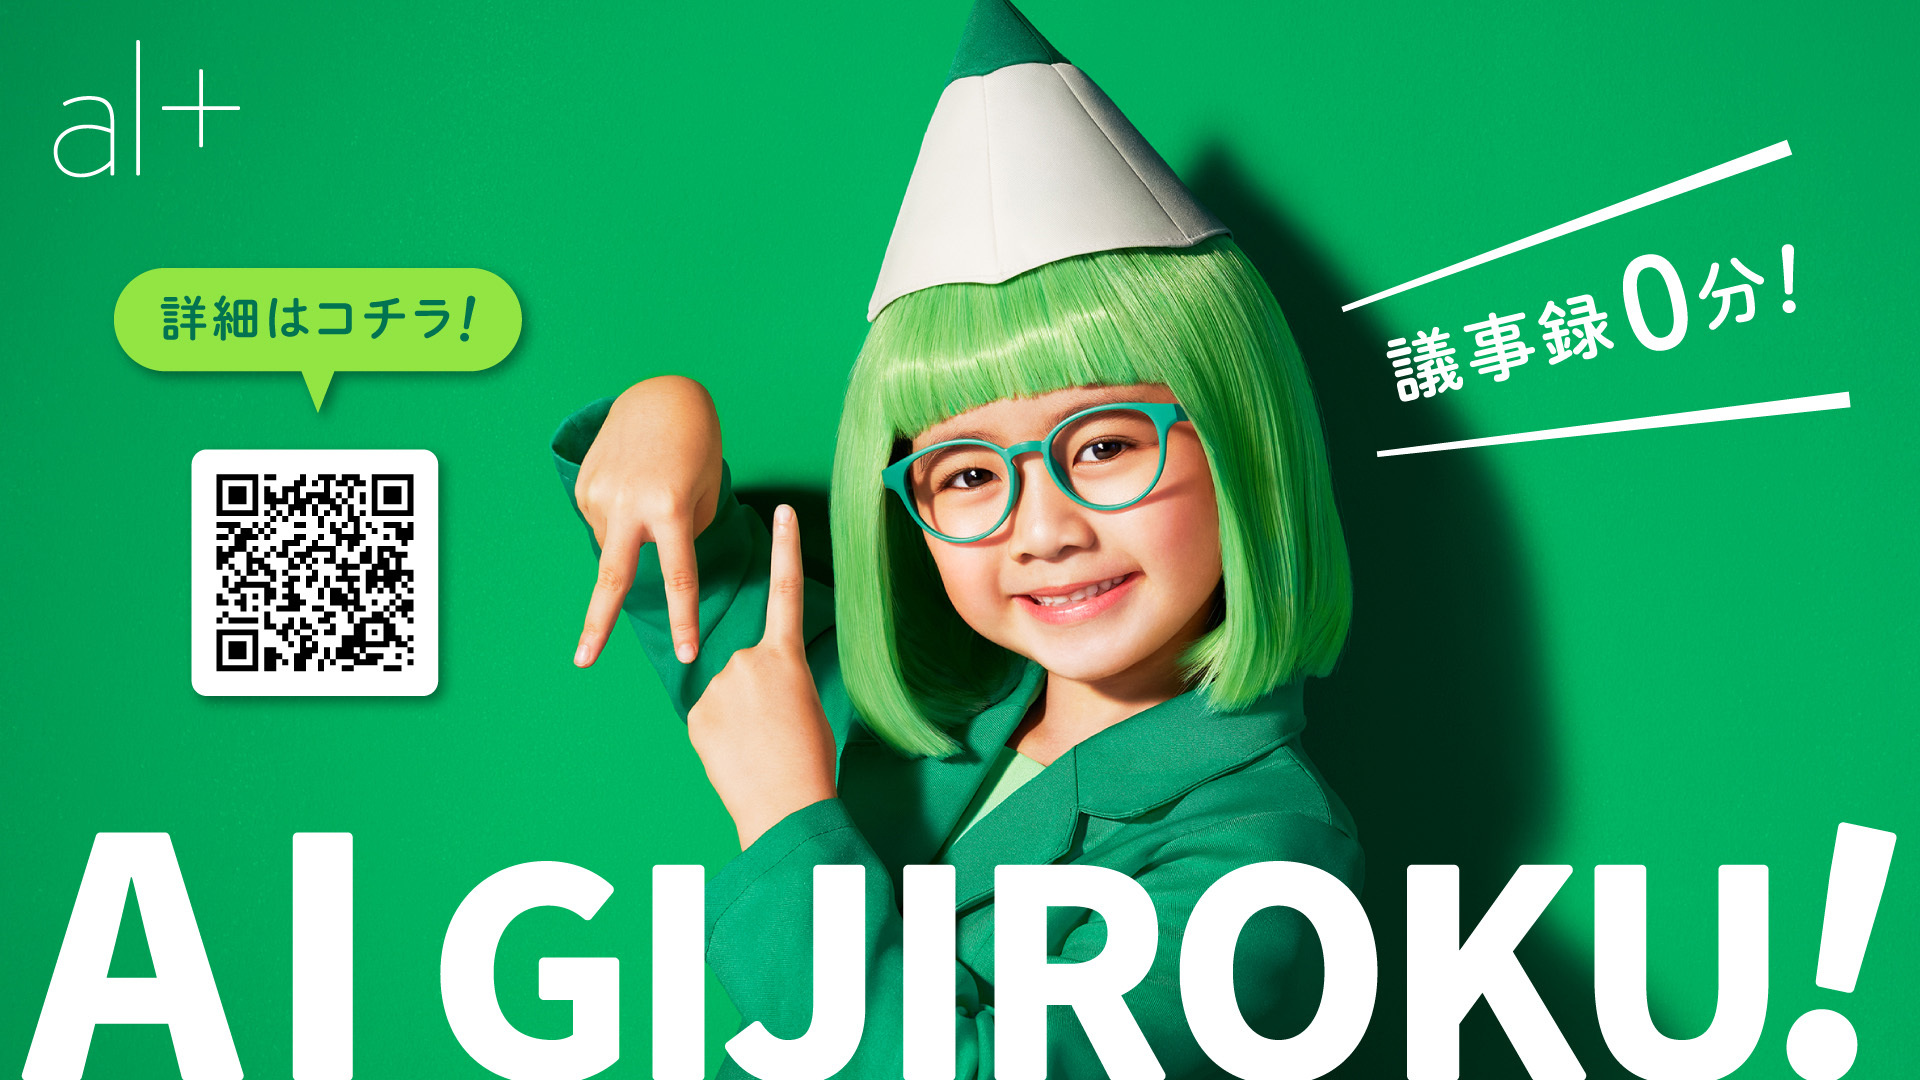 ai-gijiroku-2-1